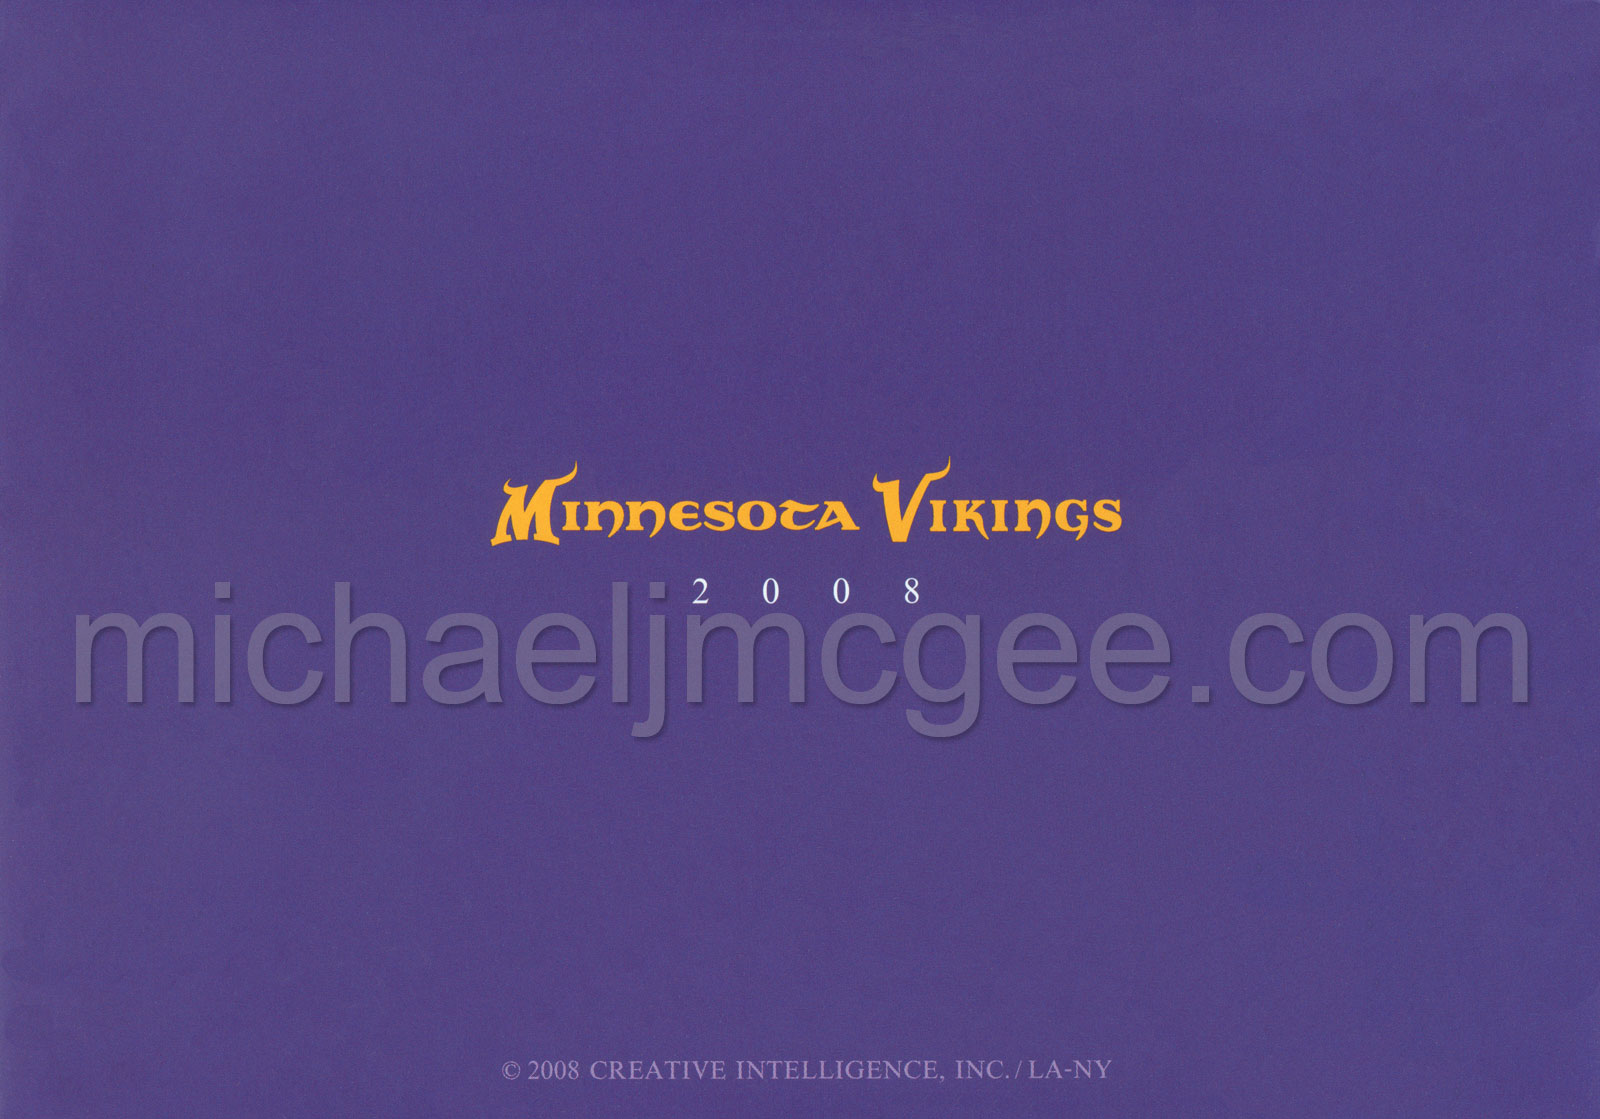 michaeljmcgee.com's Vikings stuff / michaeljmcgee.com